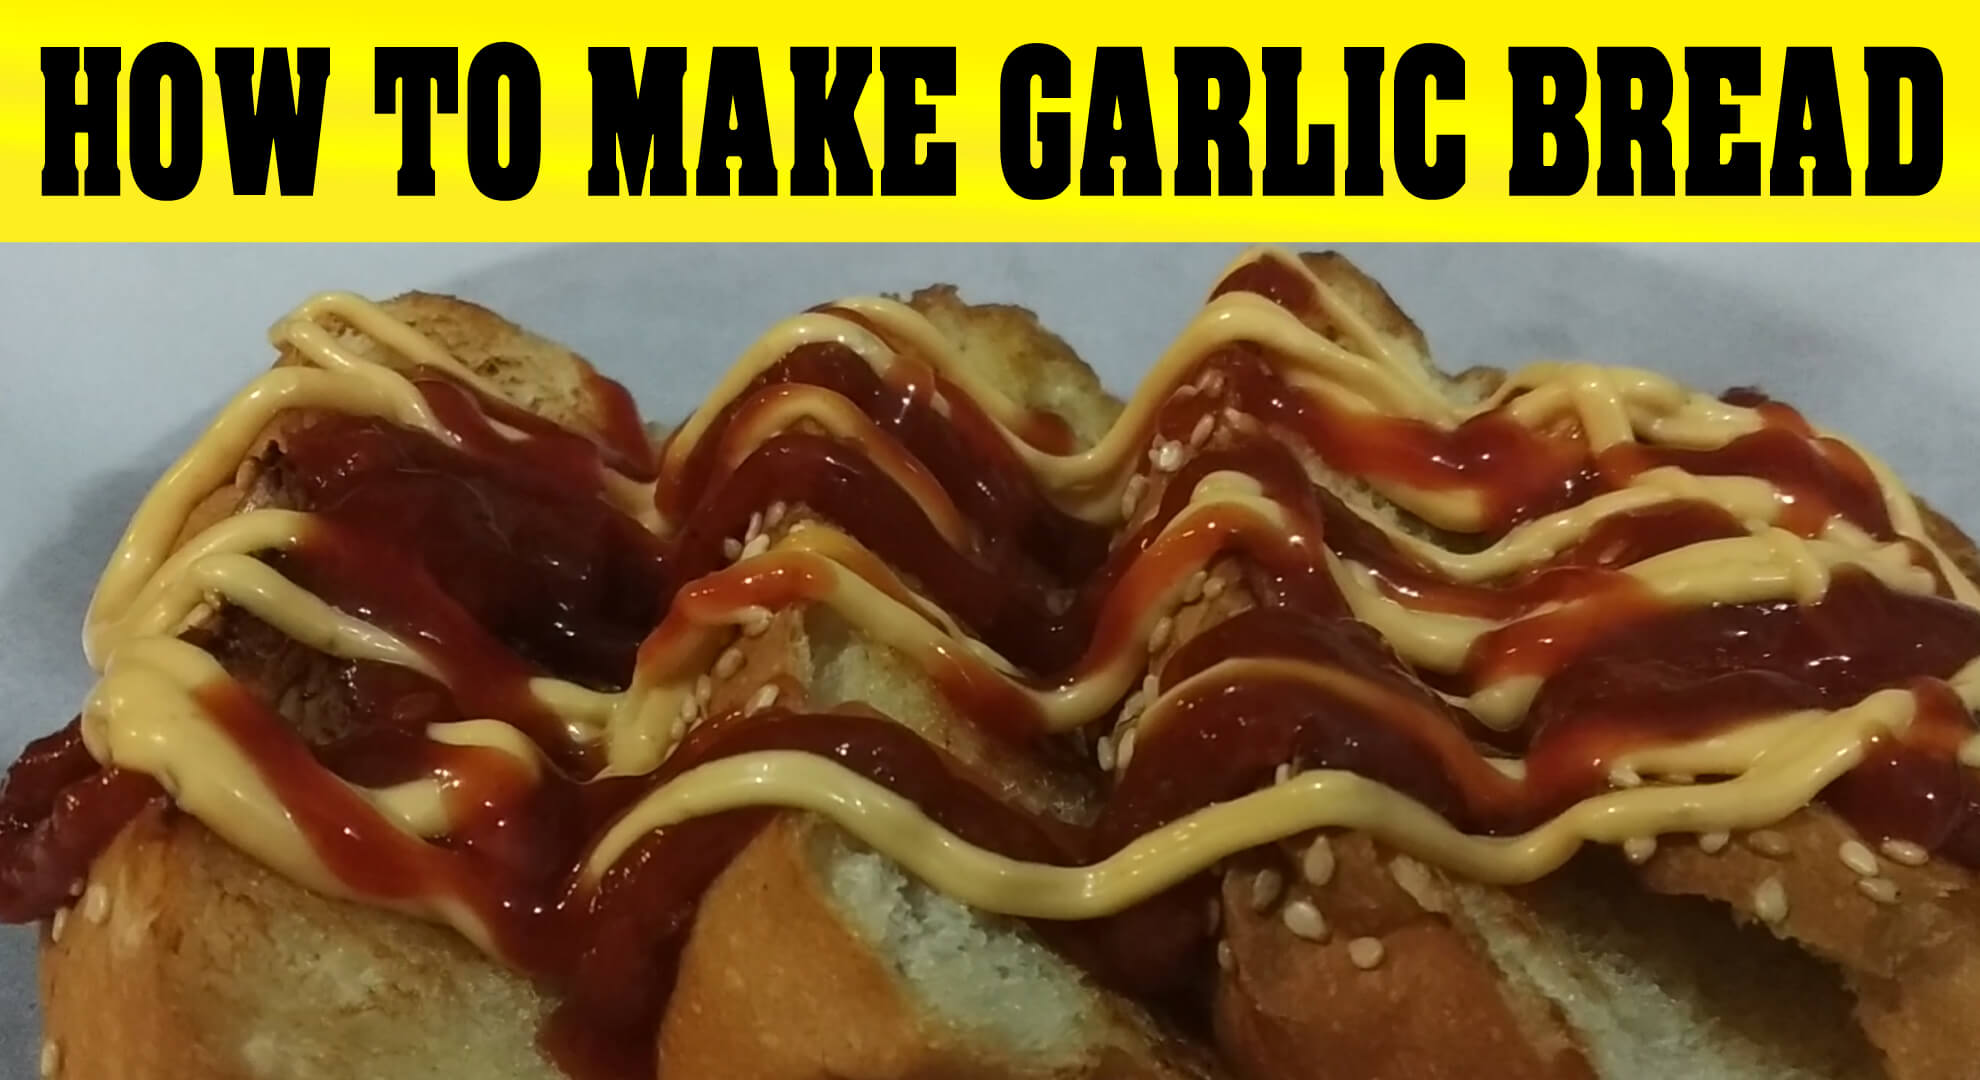 How to Make Garlic Bread | கார்லிக் பிரெட் தயாரிப்பது எப்படி